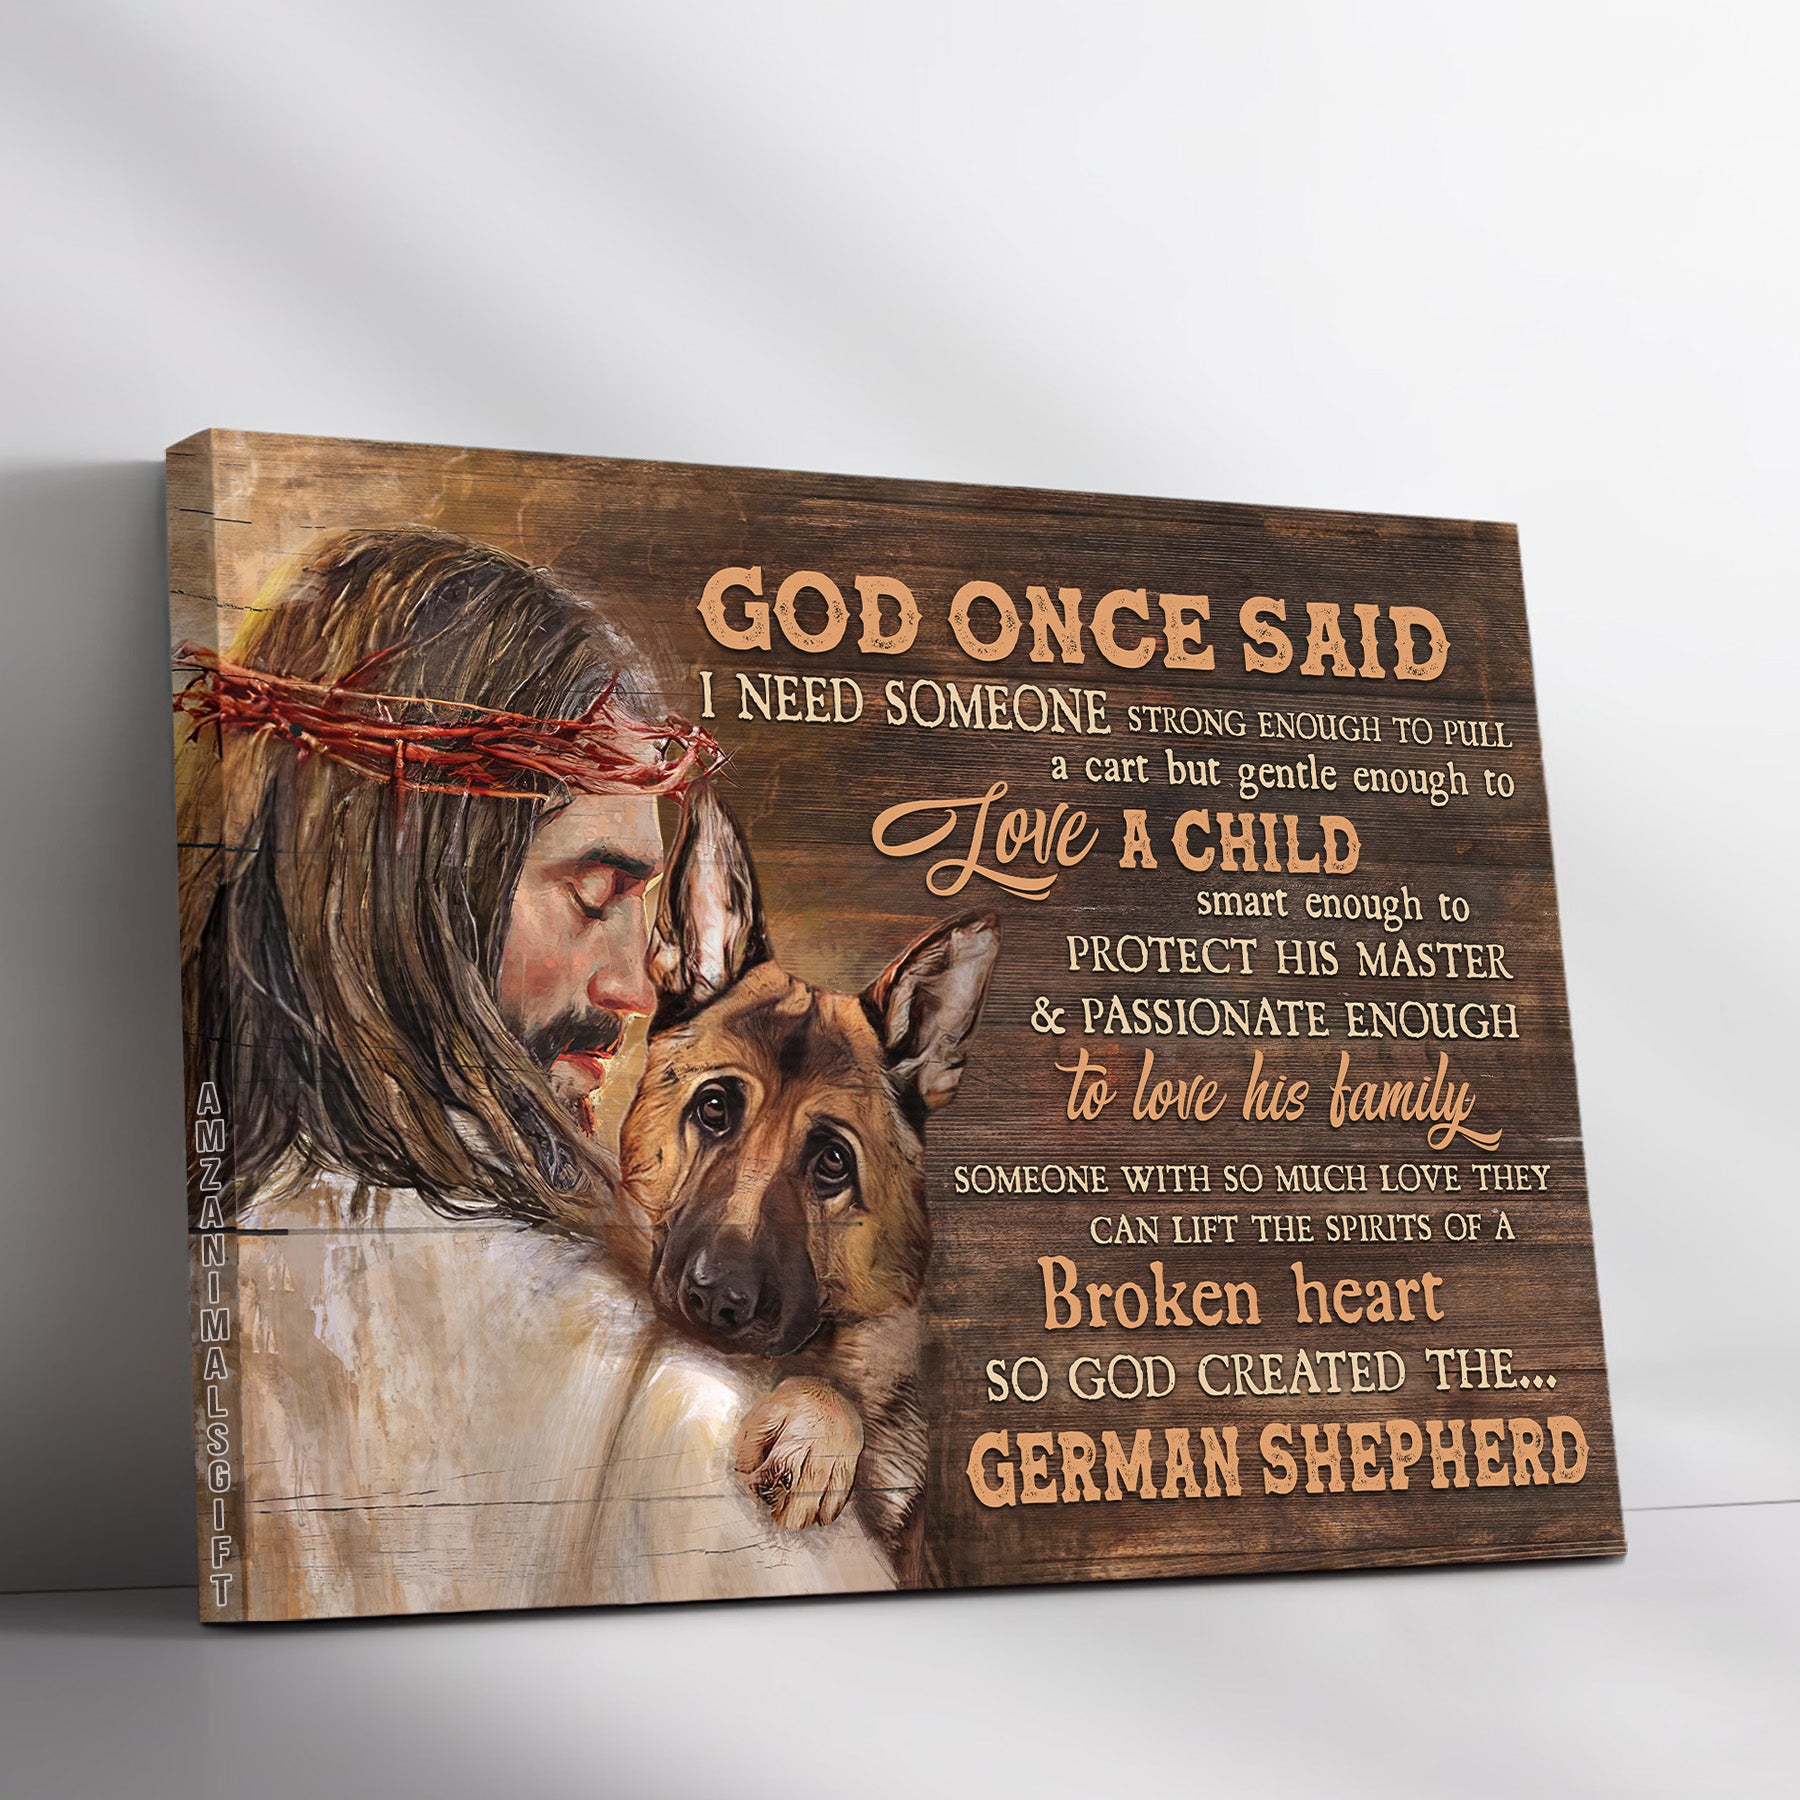 German Shepherd & Jesus Premium Wrapped Landscape Canvas -  German Shepherd Drawing, Walking With Jesus, God Once Said - Gift For Christian